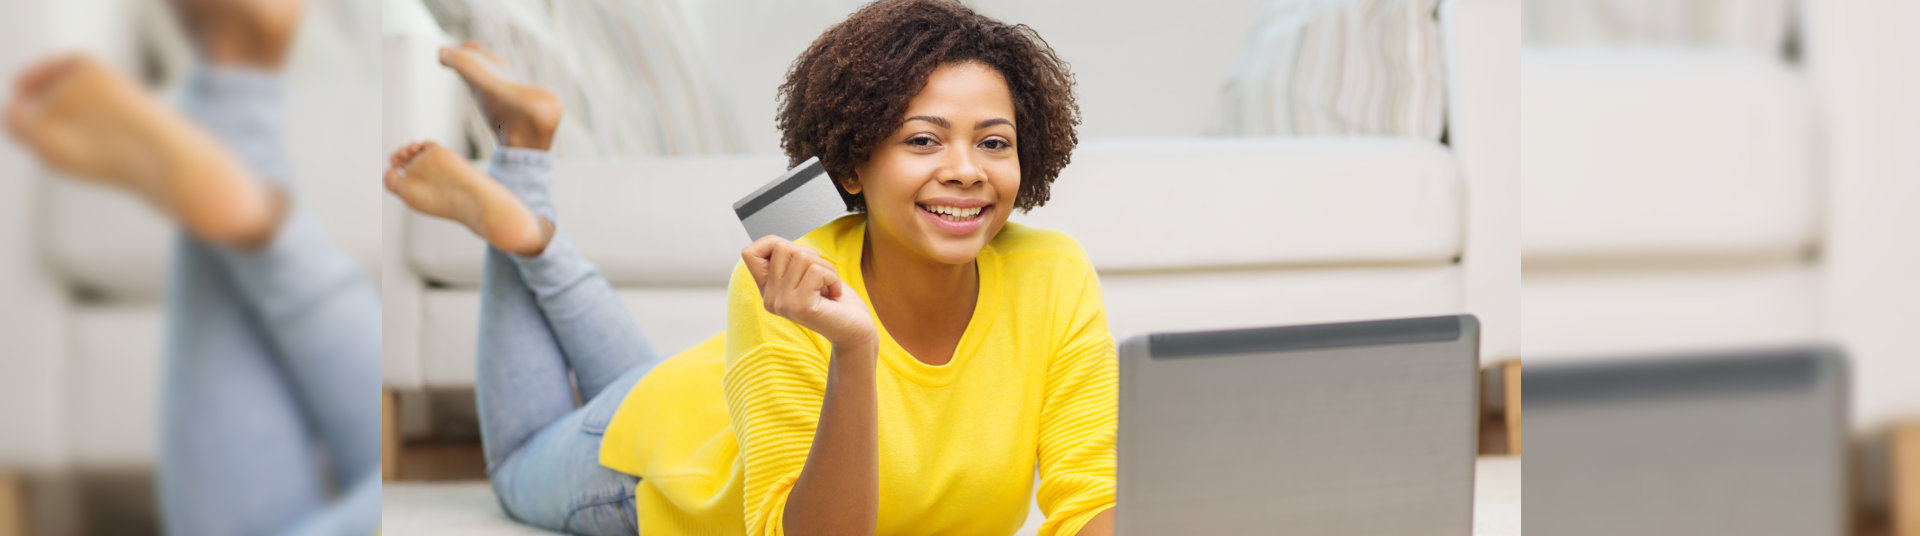 woman holding her debit card